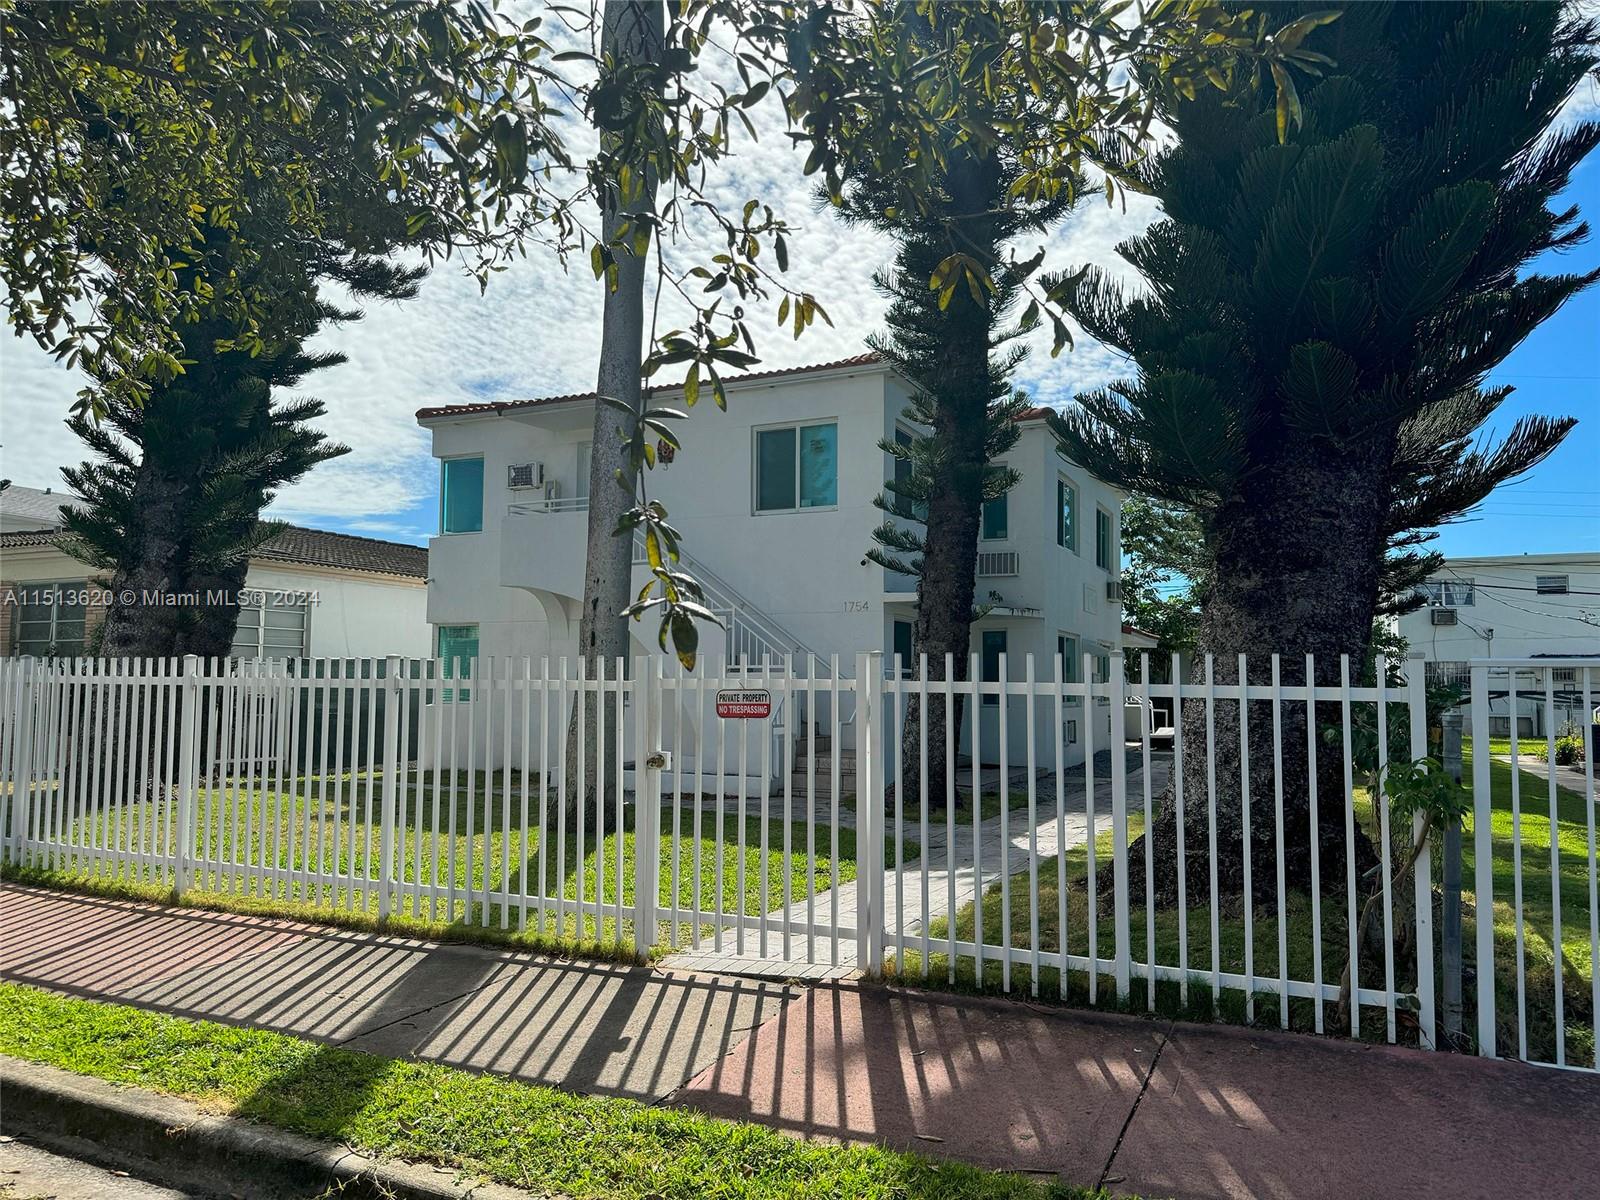 Rental Property at 1754 Marseille Dr, Miami Beach, Miami-Dade County, Florida -  - $1,350,000 MO.